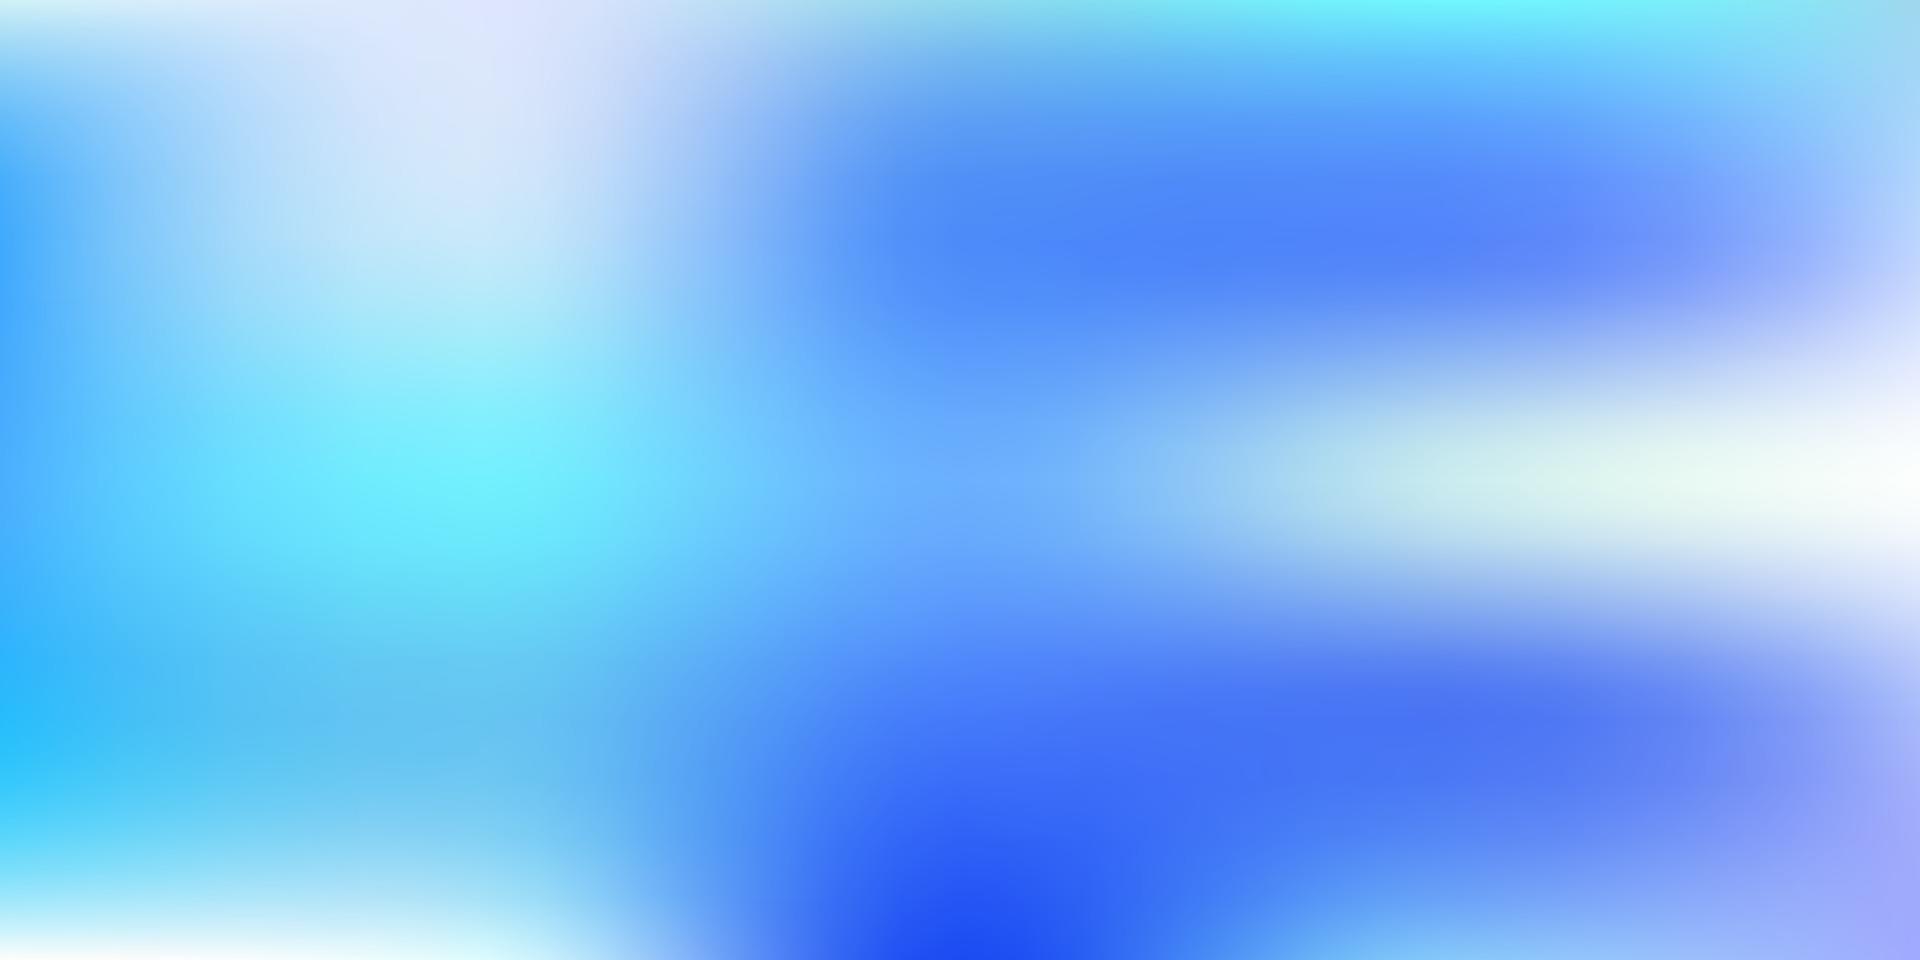 sfondo sfocato sfumato vettoriale blu chiaro.